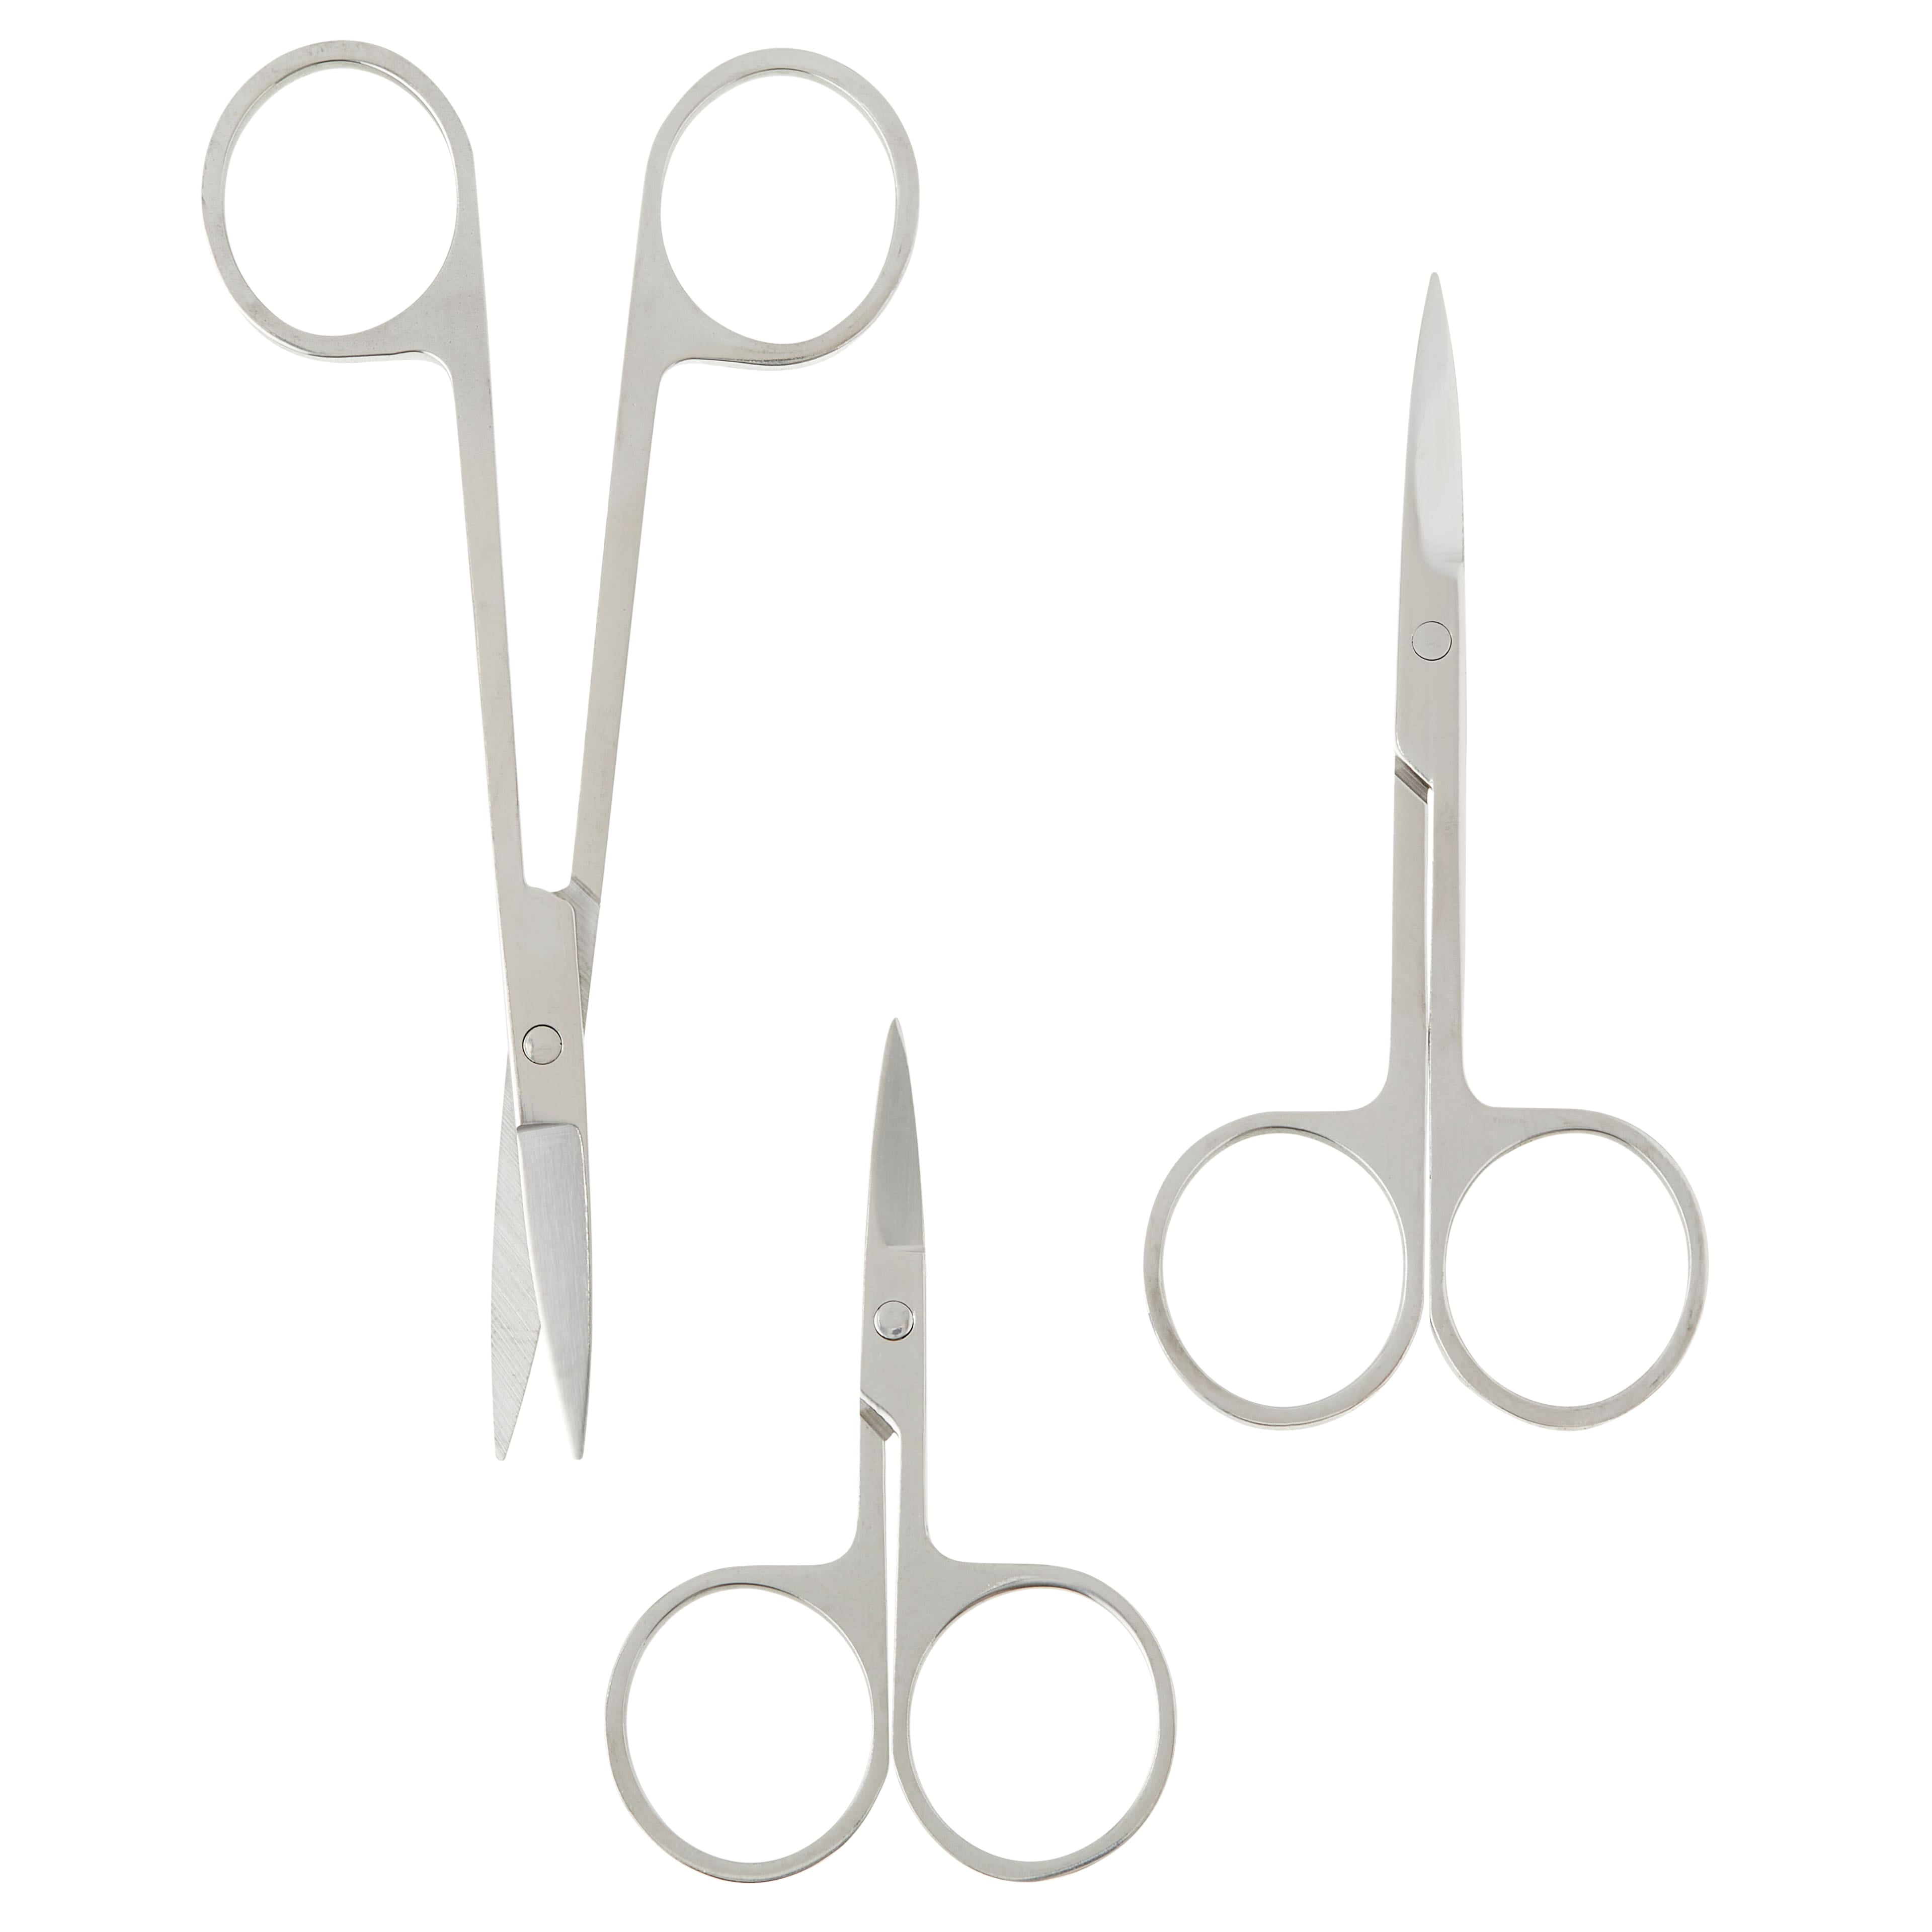 3pcs Loop Scissors Grip Scissor For Teens And Adults, Safety Self-opening  Scissors, Adaptive Design